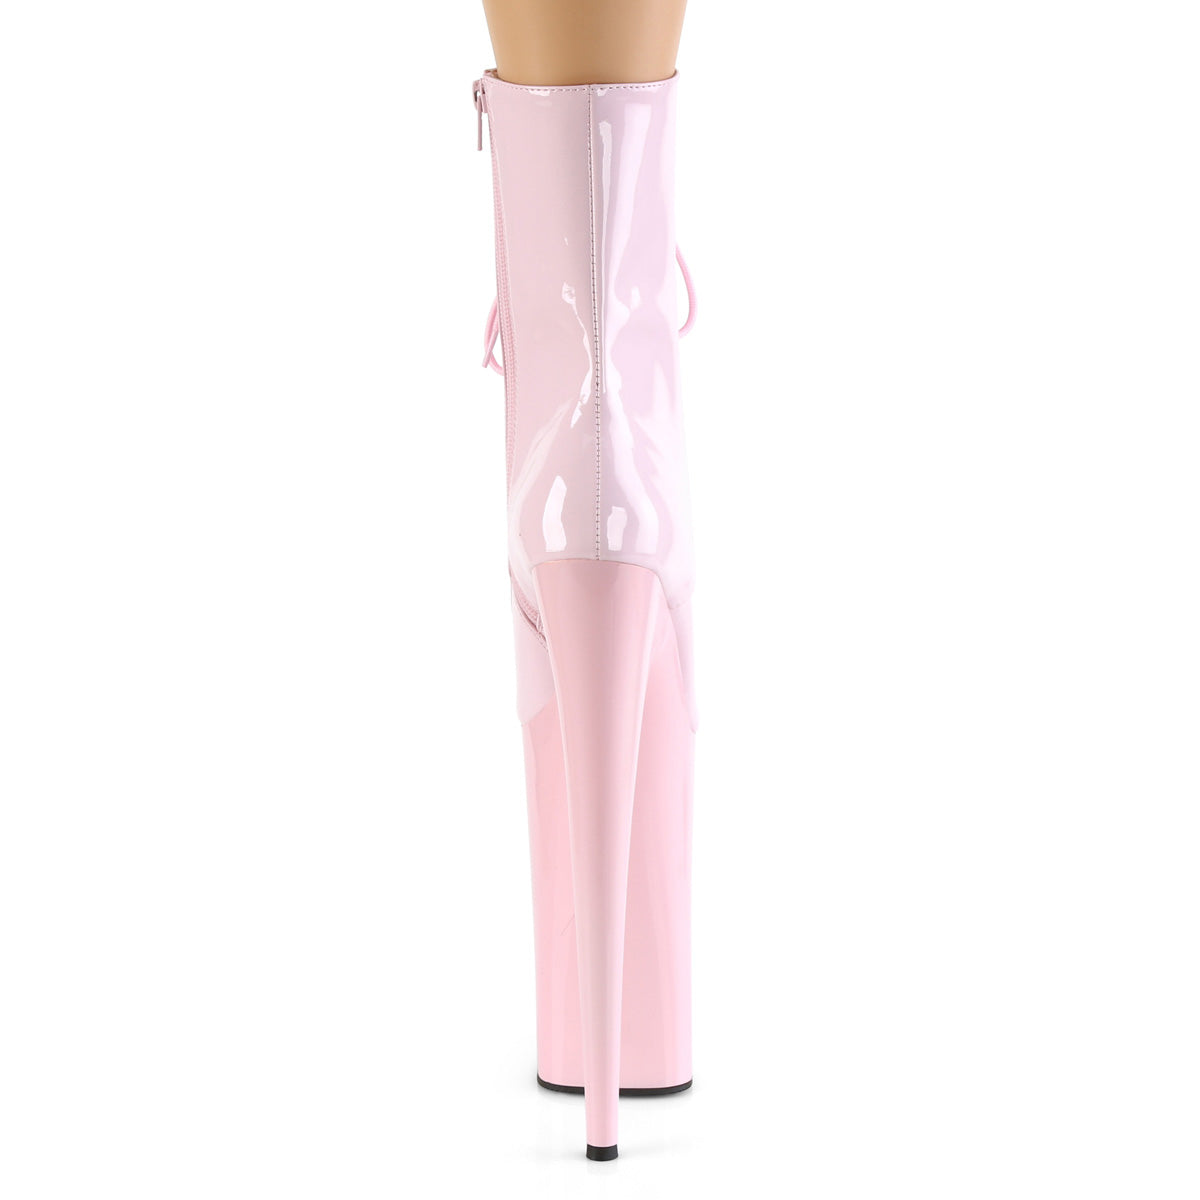 BEYOND-1020 Pleaser B Pink Patent/B Pink Platform Shoes [Extreme High Heels]